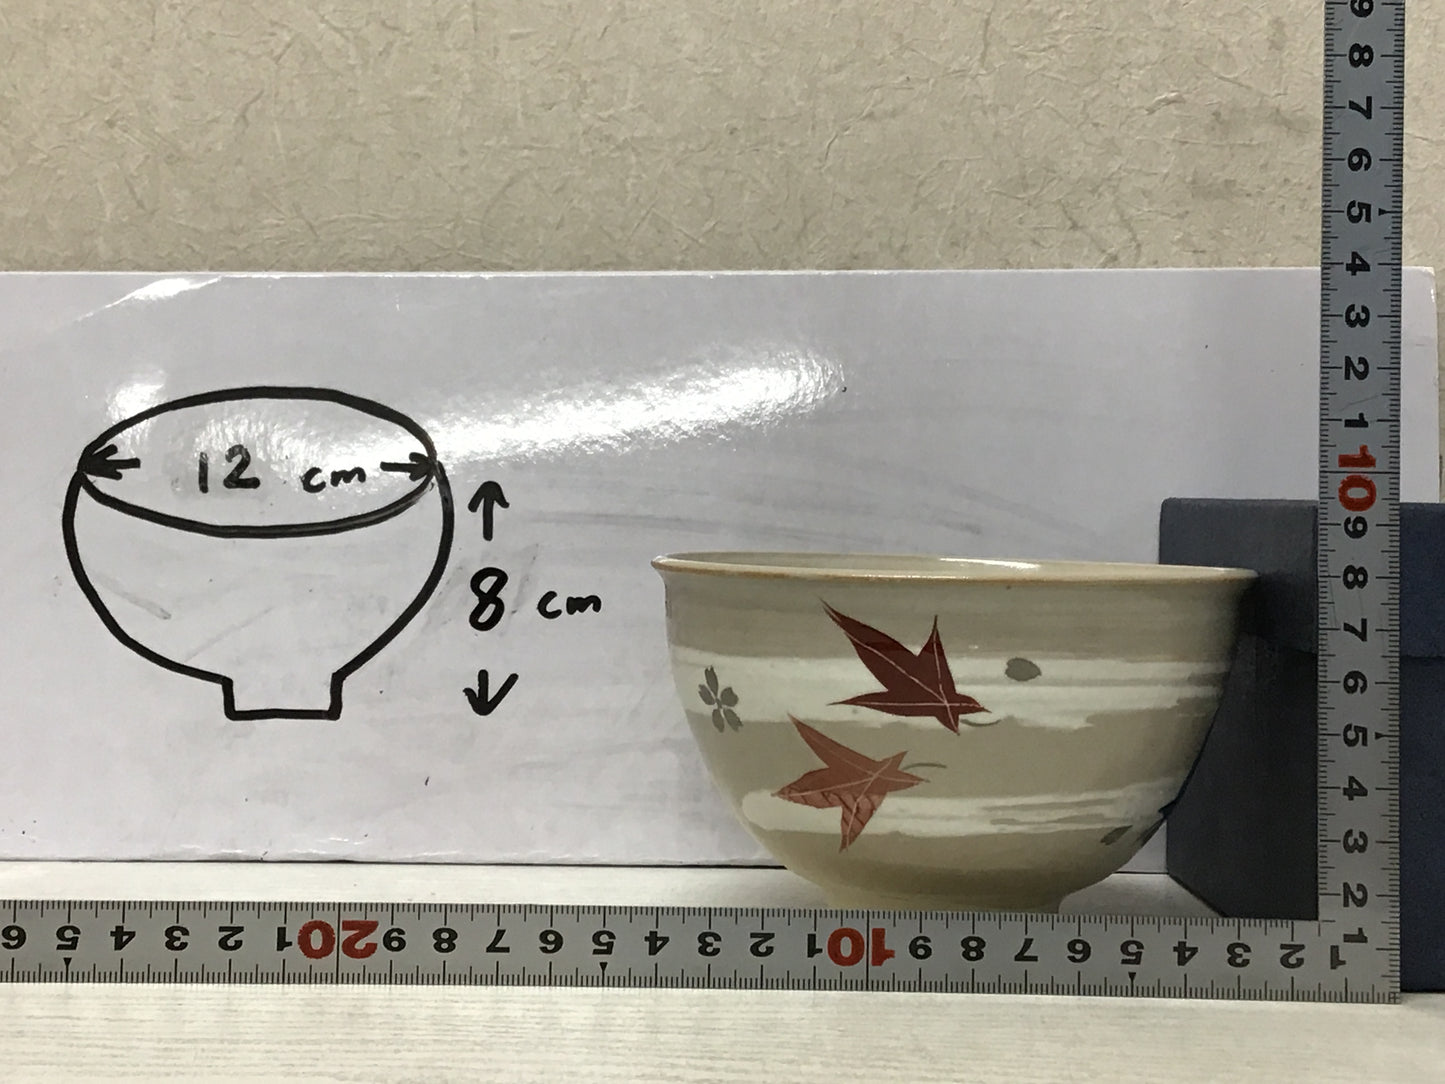 Y1763 CHAWAN Inuyama-ware signed box Japanese bowl pottery Japan tea ceremony